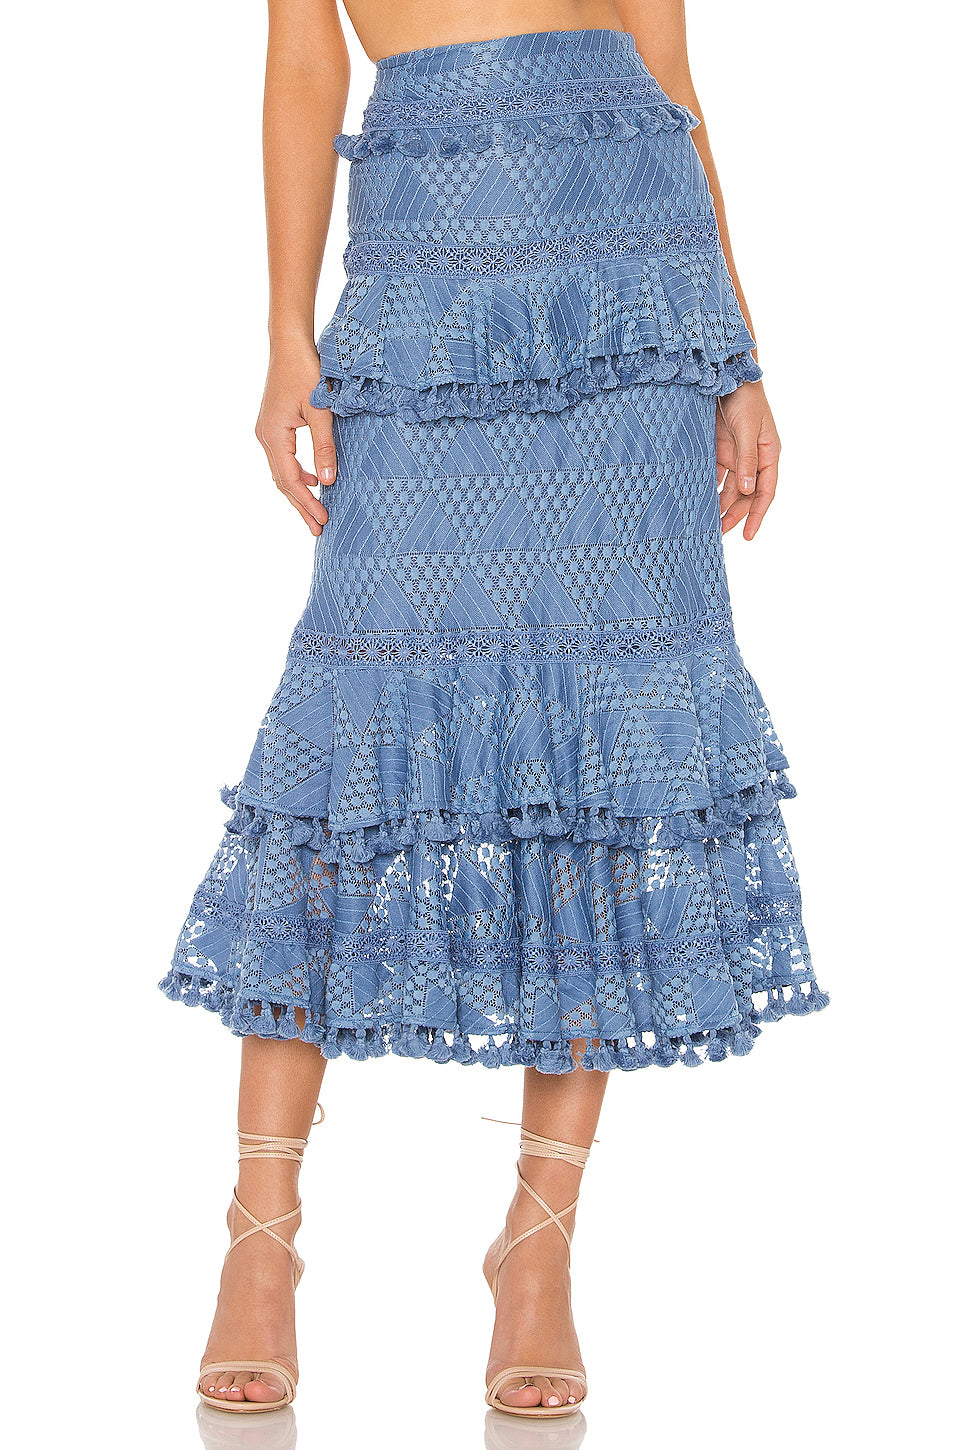 Addie Skirt in SLATE BLUE